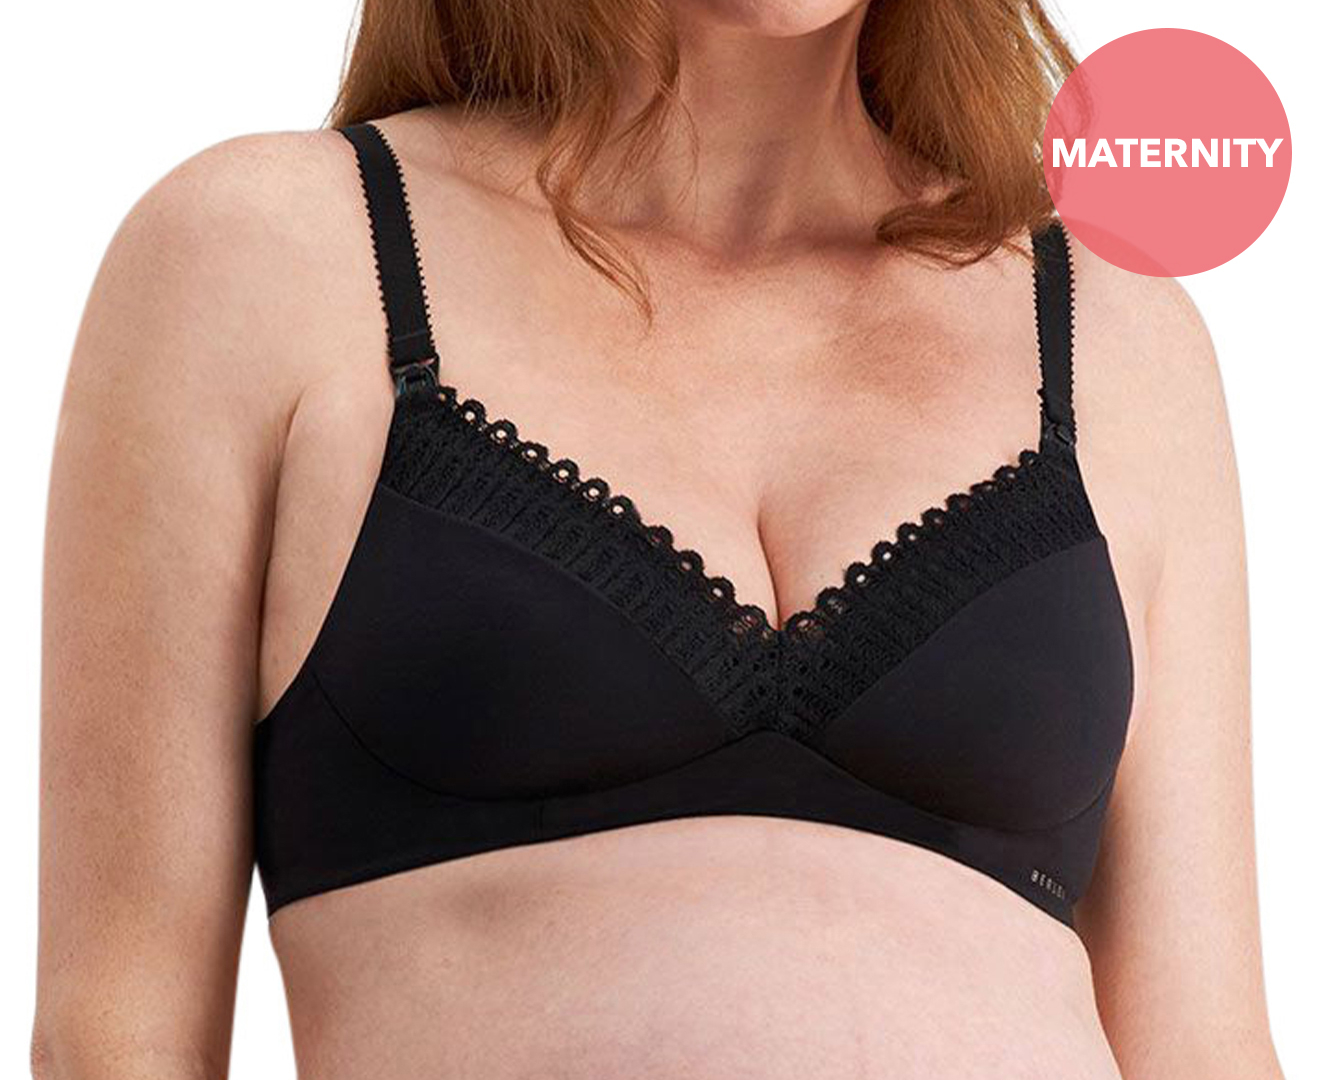 Berlei Women's UnderState Full Coverage Lace Wirefree Maternity Bra - Black